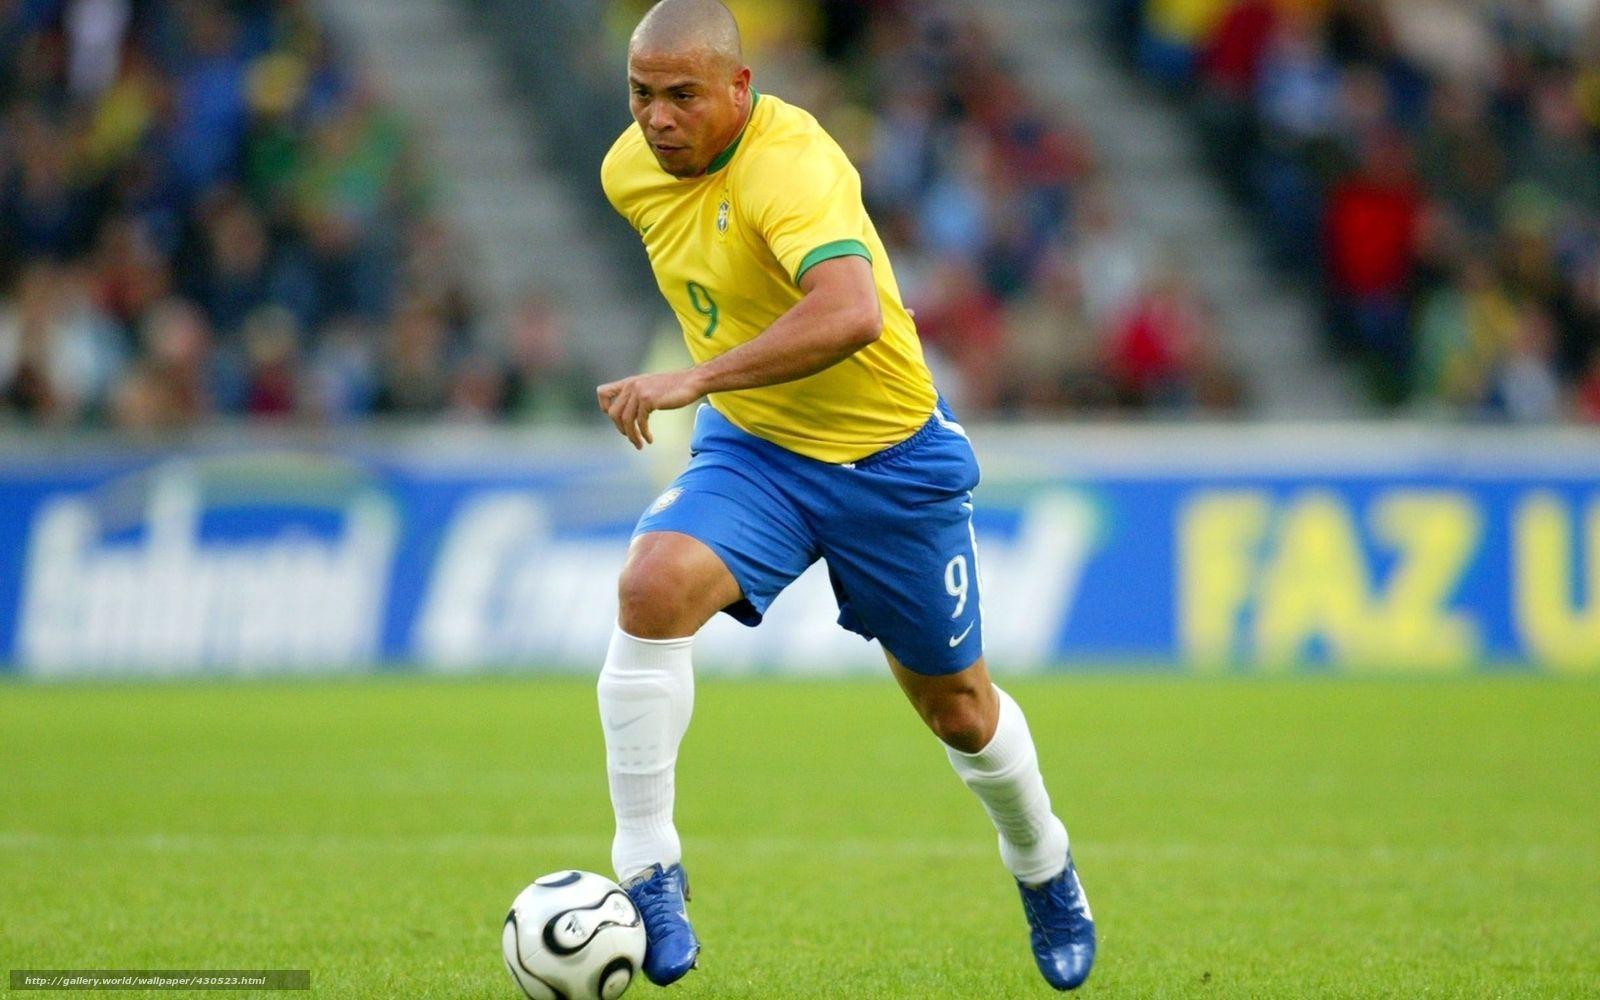 Download wallpapers Ronaldo Luis Nazario Yes Lima, footballer, star